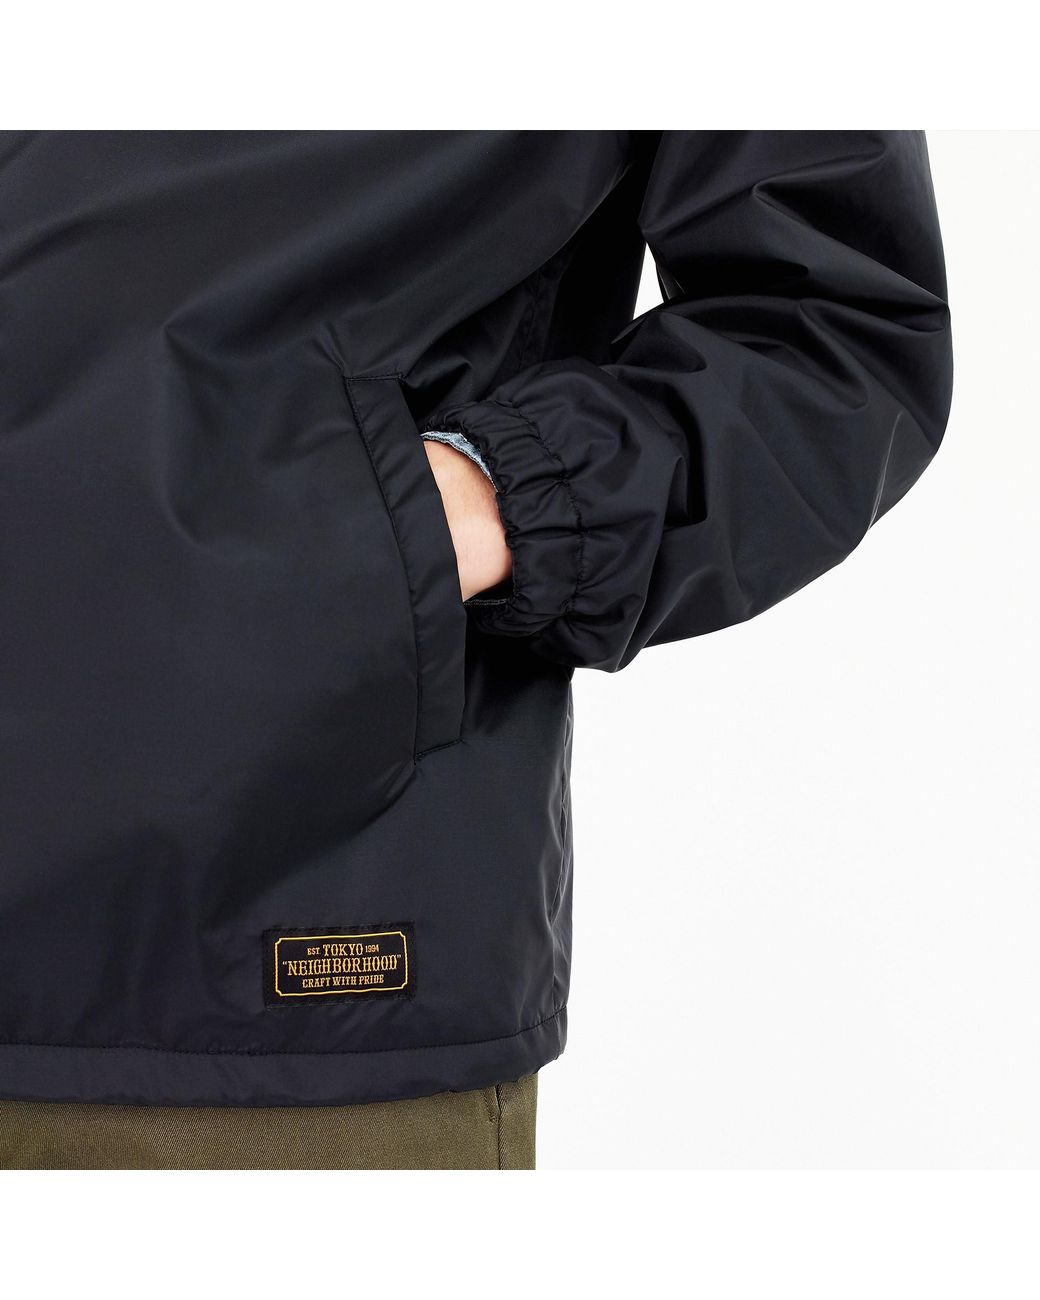 Neighborhood Coach's Jacket in Black for Men | Lyst